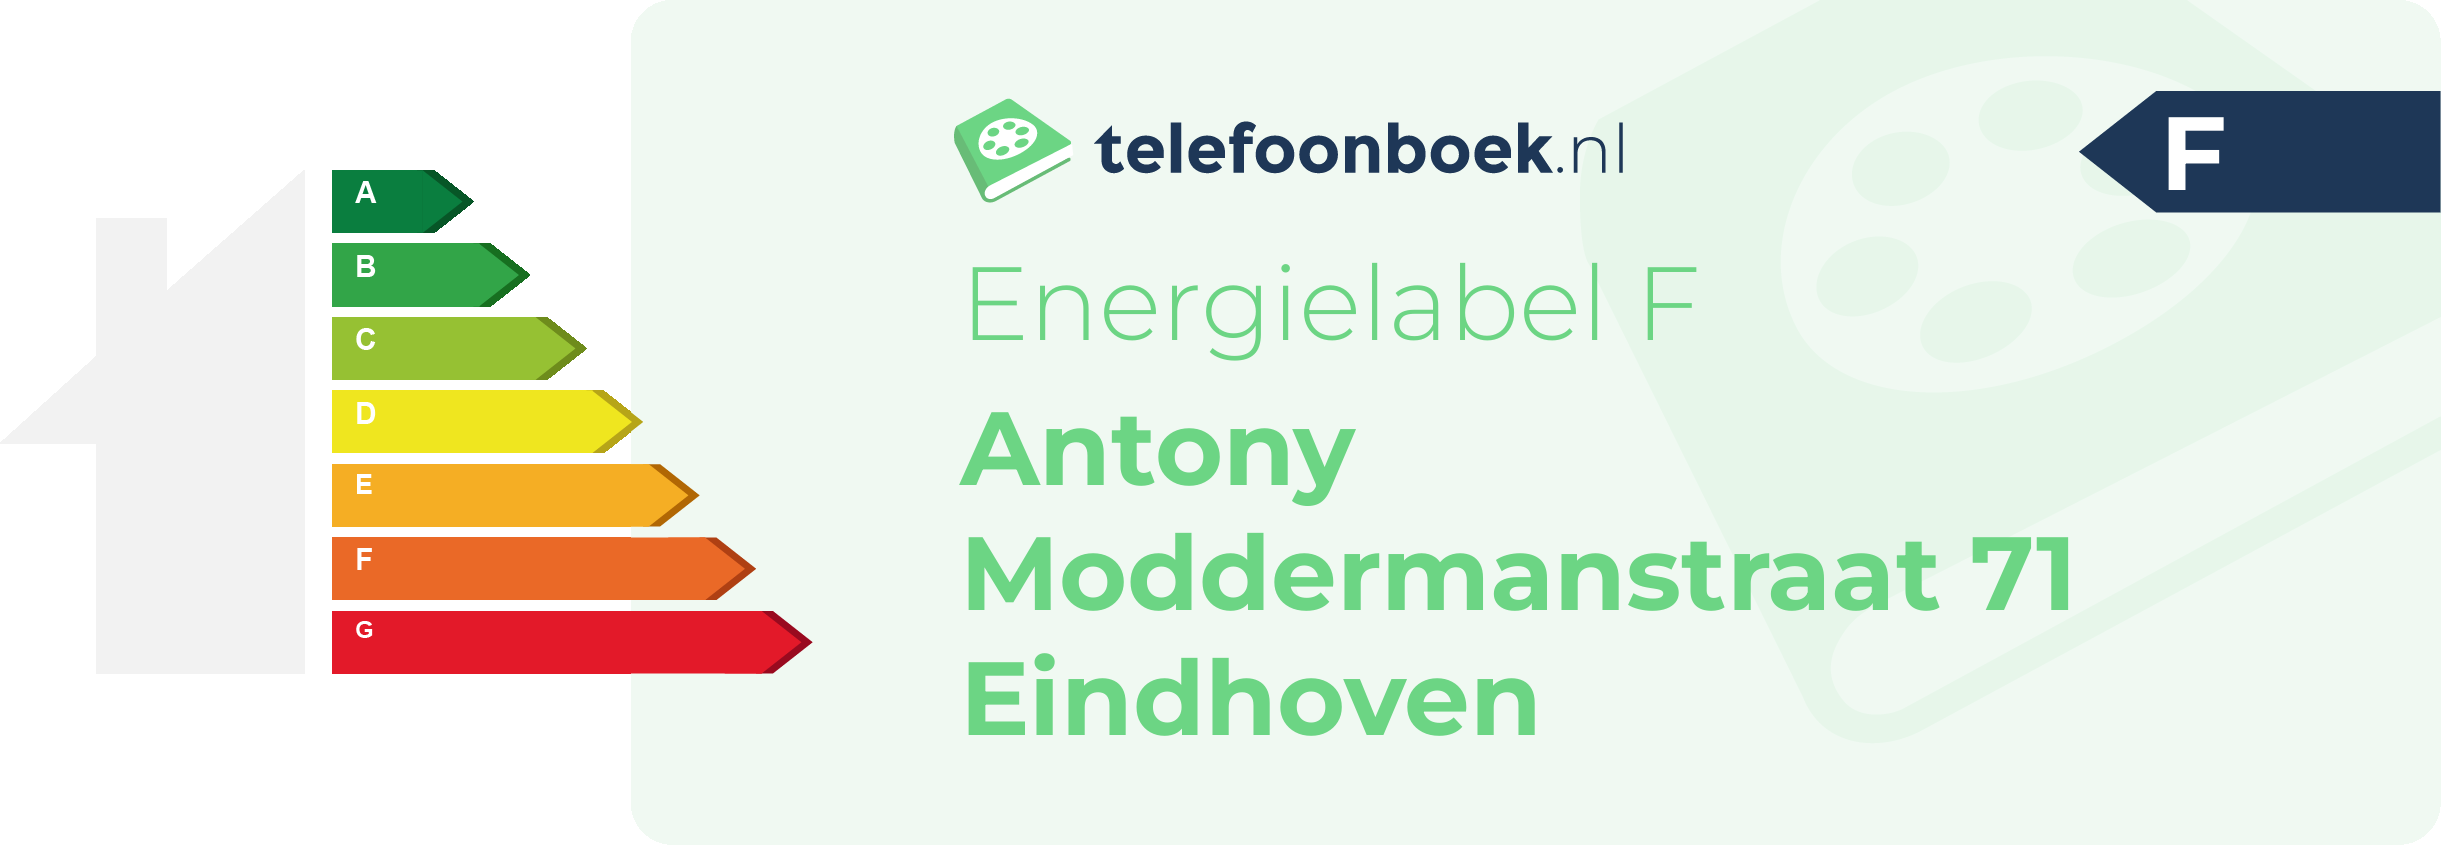 Energielabel Antony Moddermanstraat 71 Eindhoven